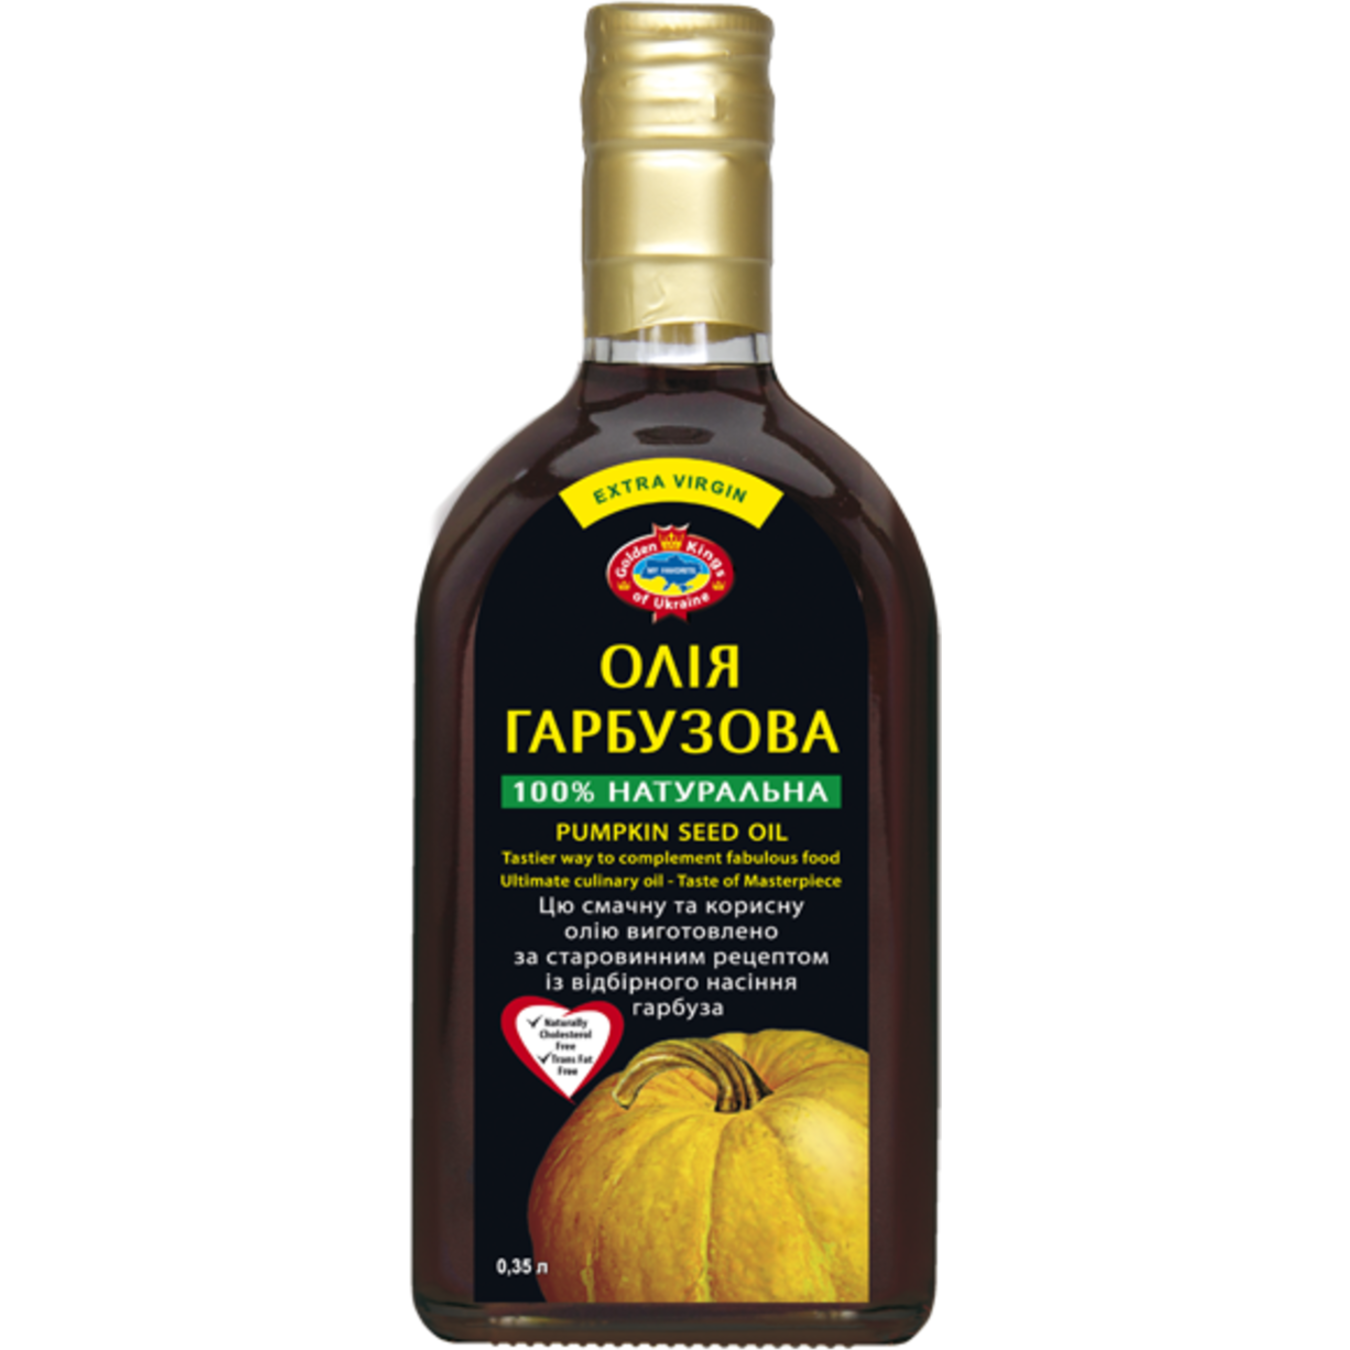 Golden kings of Ukraine pumpkin unrefined oil 350ml